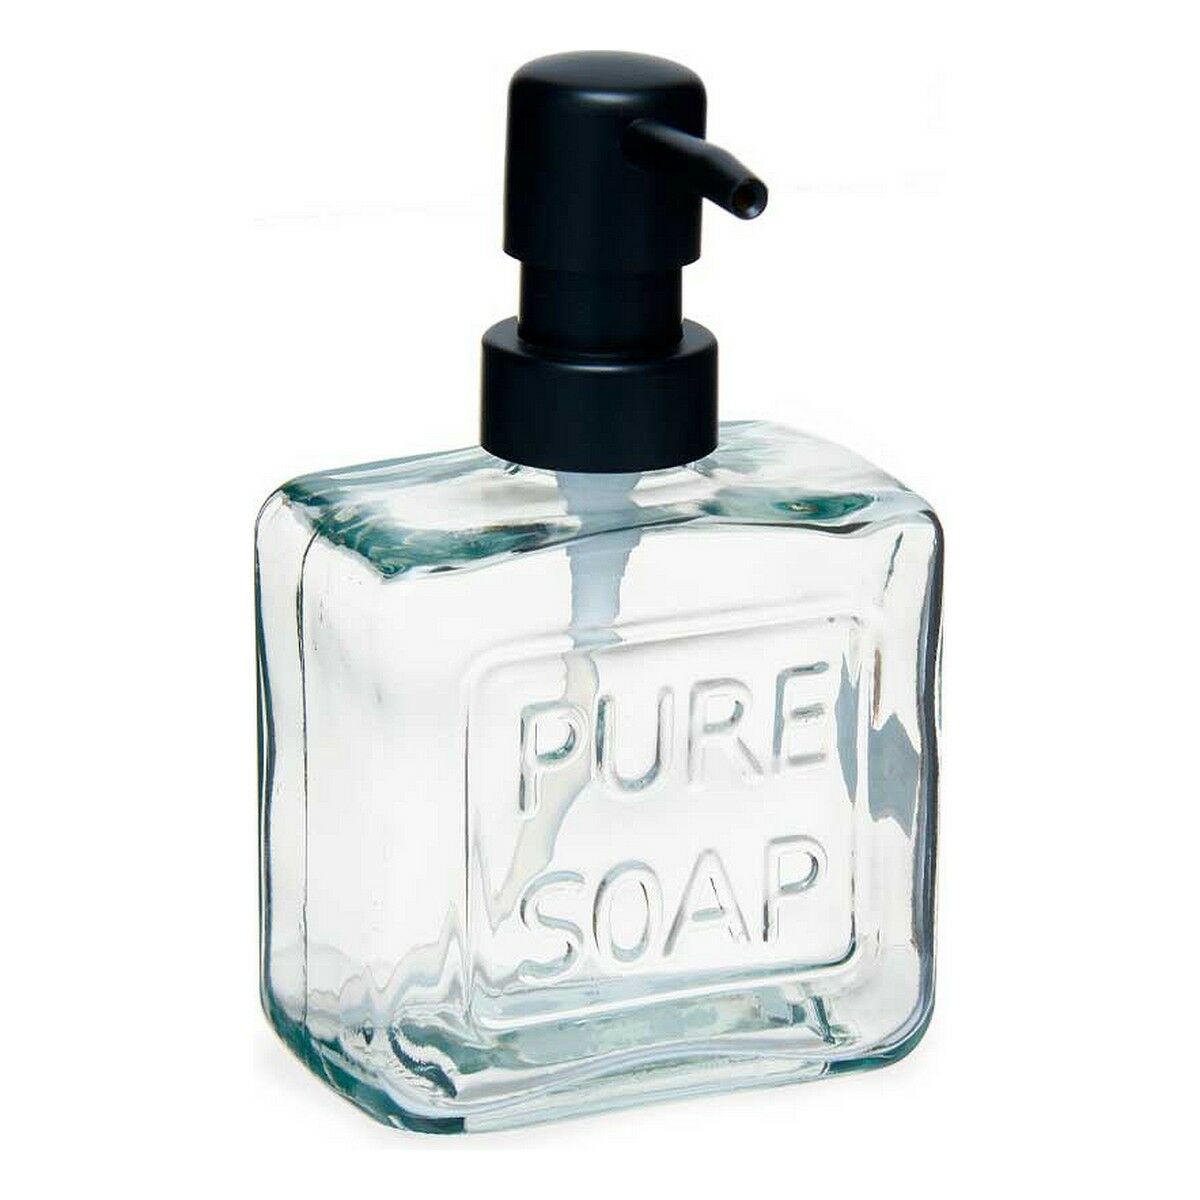 Soap Dispenser Pure Soap 250 ml Crystal Transparent Plastic (12 Units)